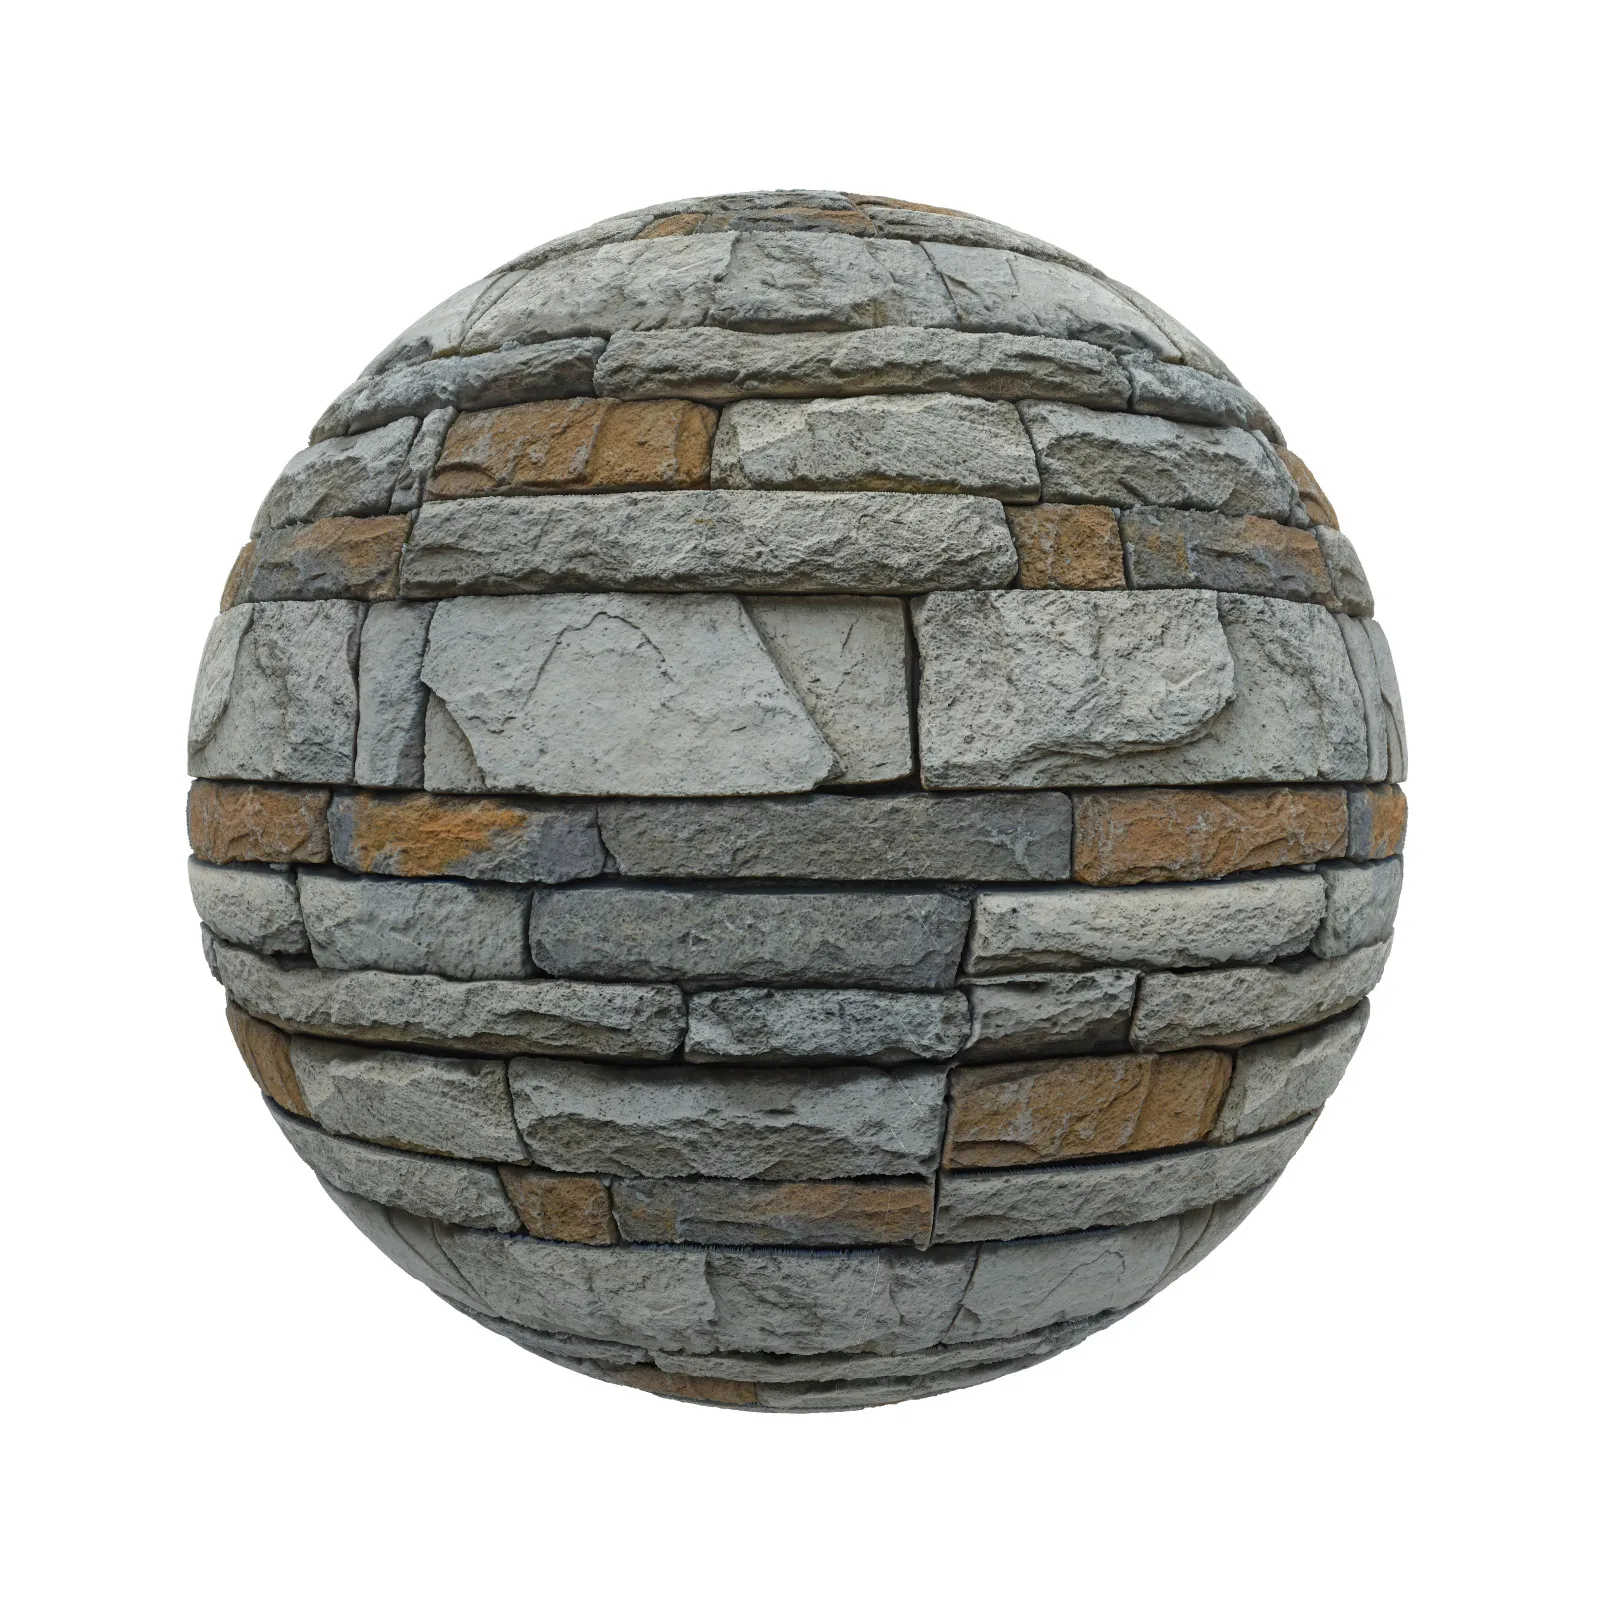 TEXTURES – STONES – CGAxis PBR Colection Vol 1 Stones – grey and orange stone bricks